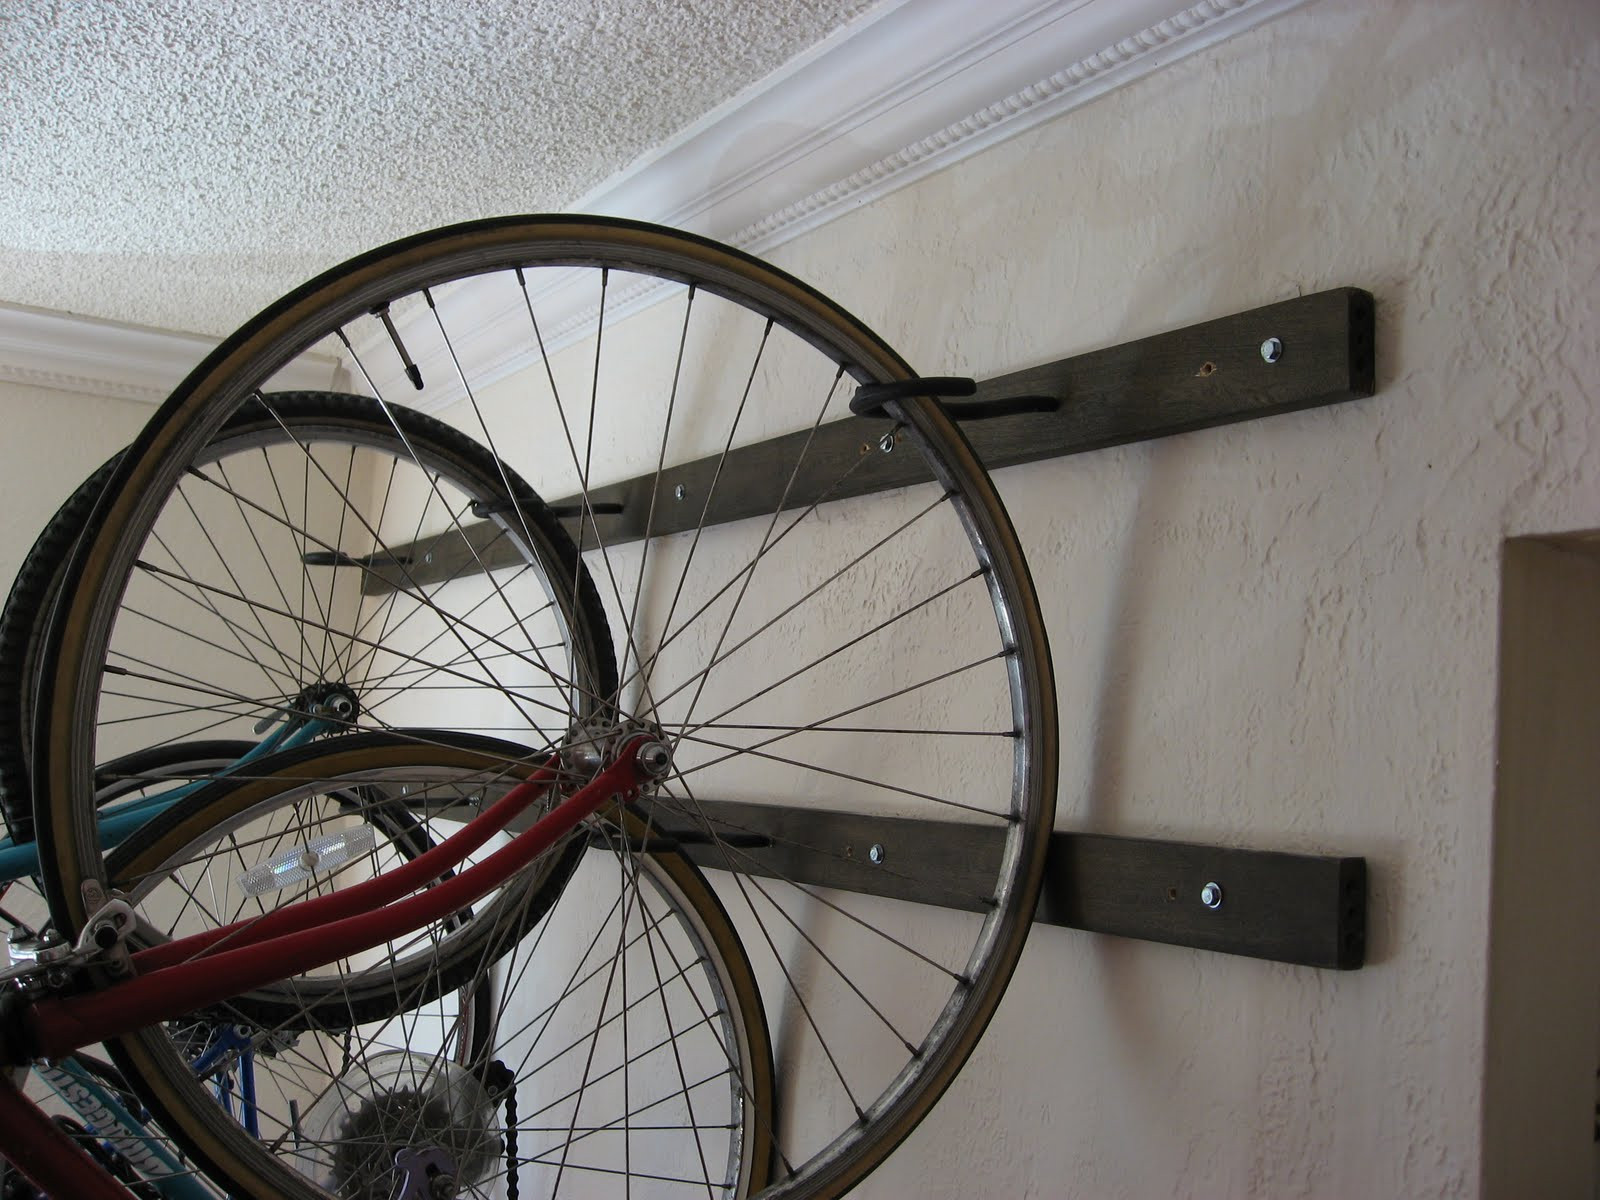 DIY Wall Bike Rack
 Girl on Bike Post 100 My Brand New Homemade Wall